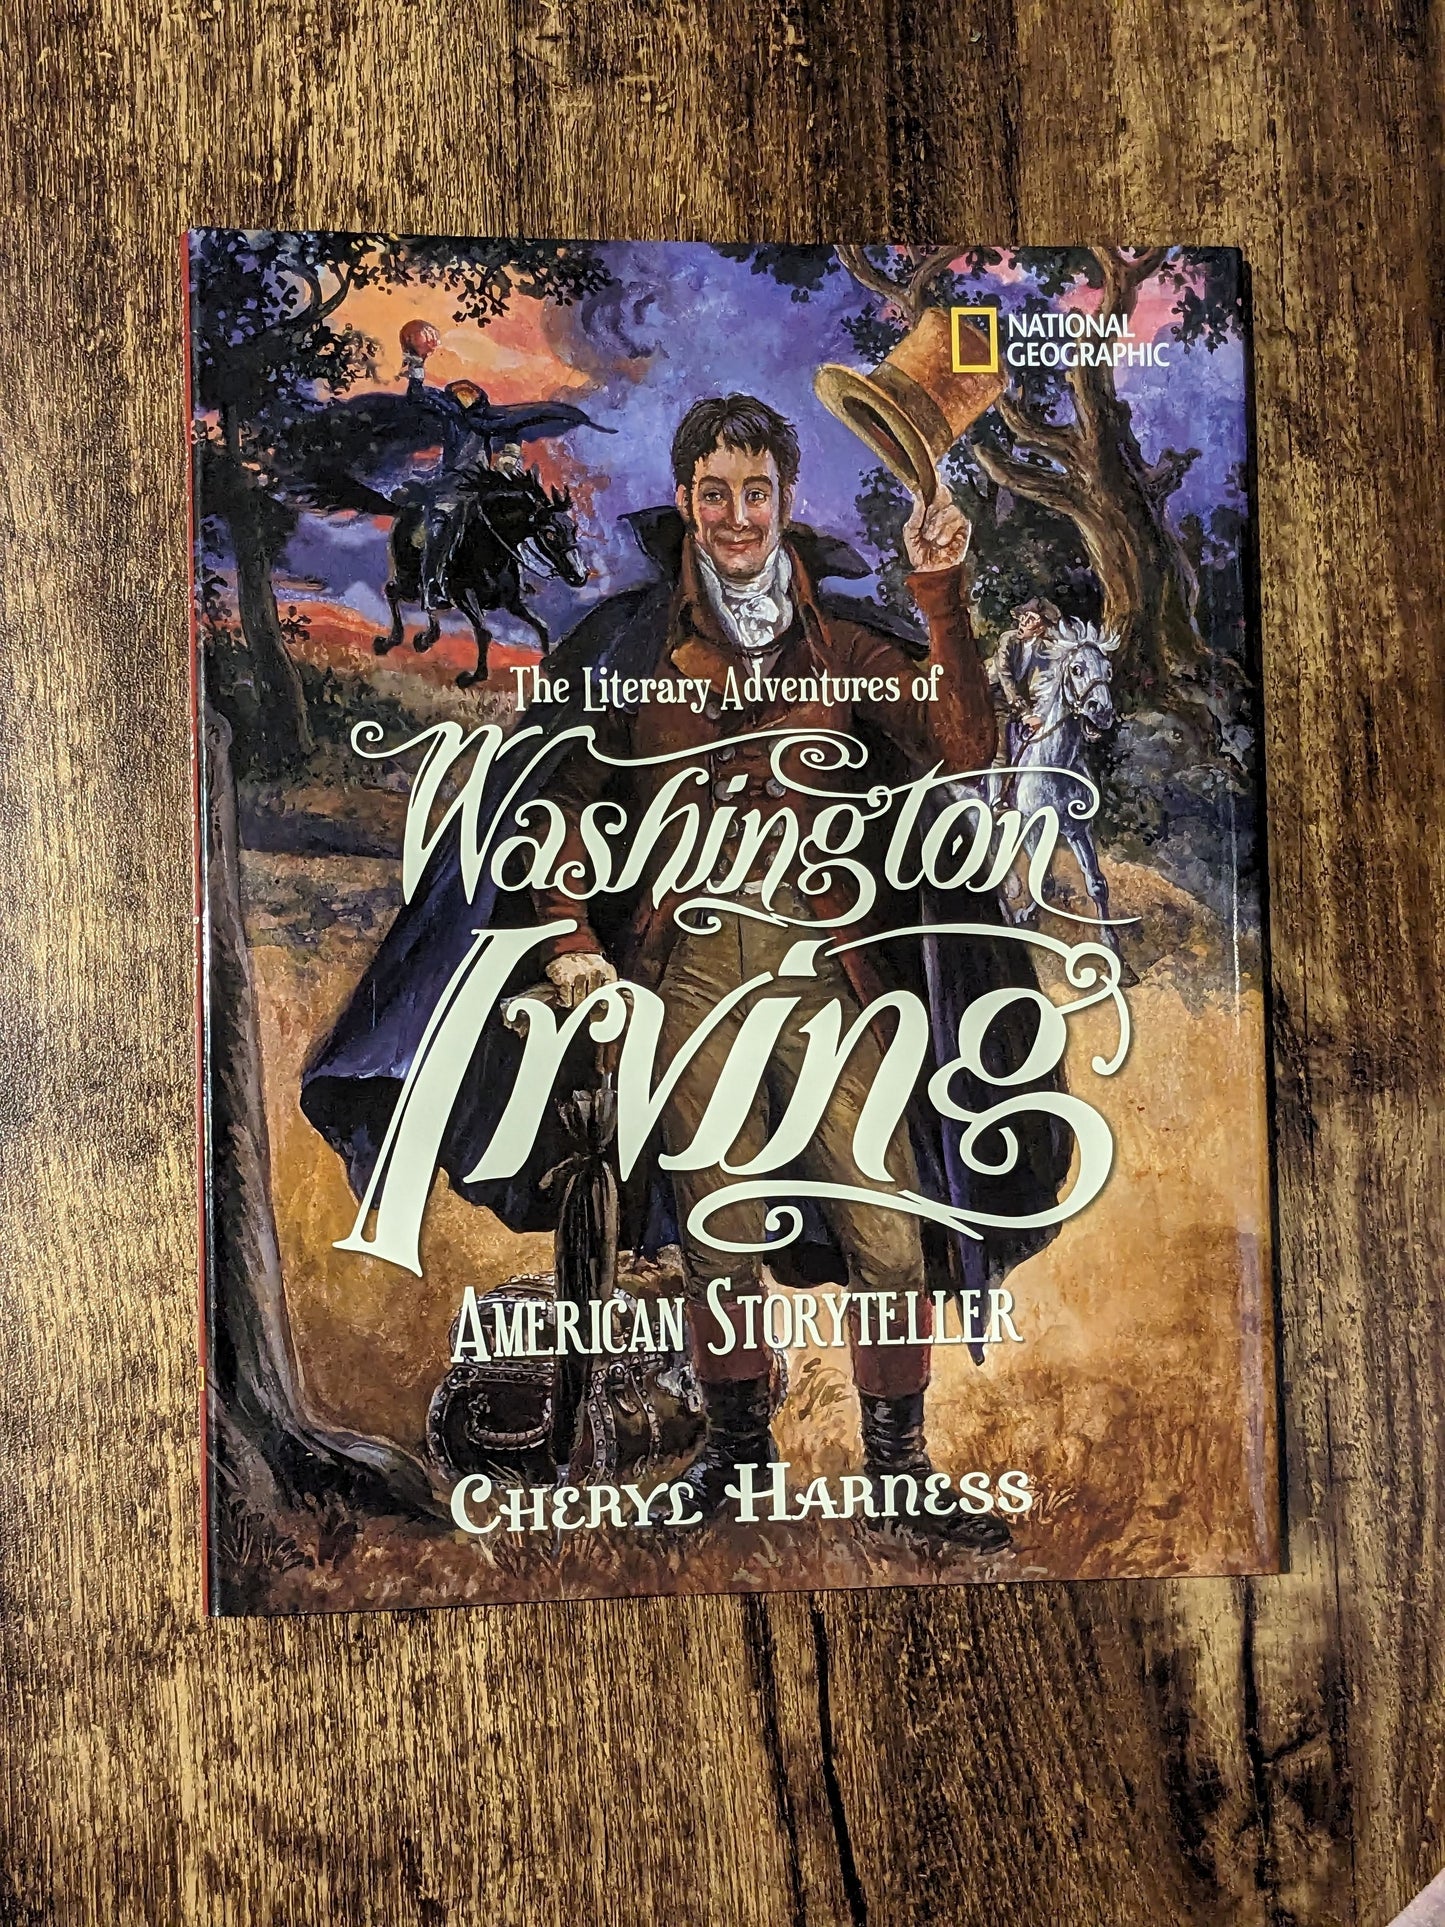 Literary Adventures of Washington Irving: American Storyteller, The (Hardcover) by Cheryl Harness - Asylum Books